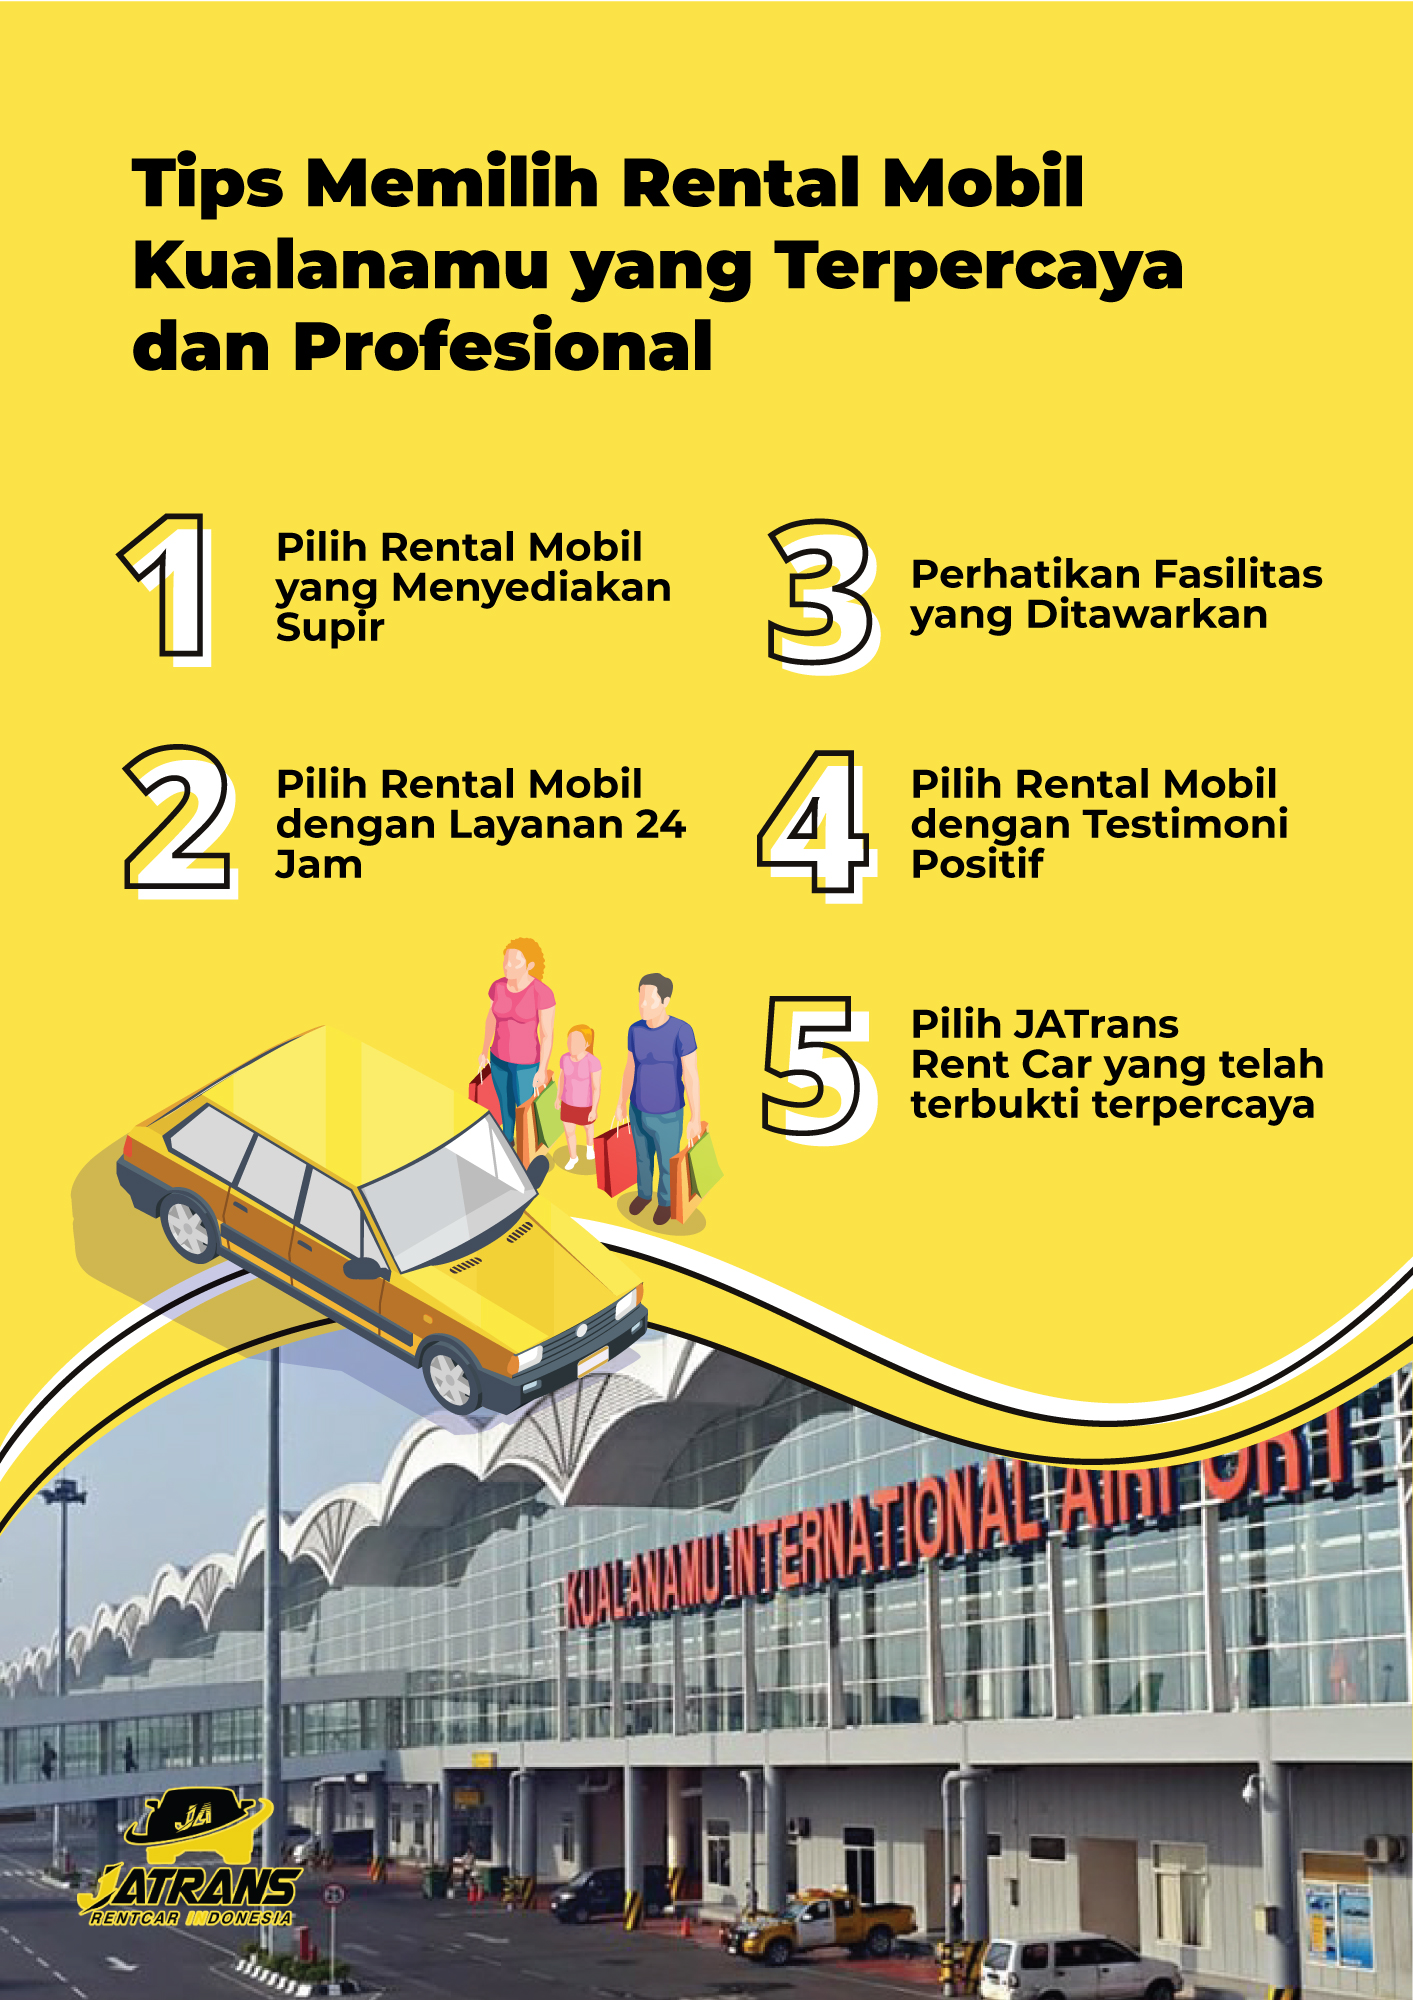 Tips Memilih Rental Mobil Kualanamu yang Terpercaya dan Profesional